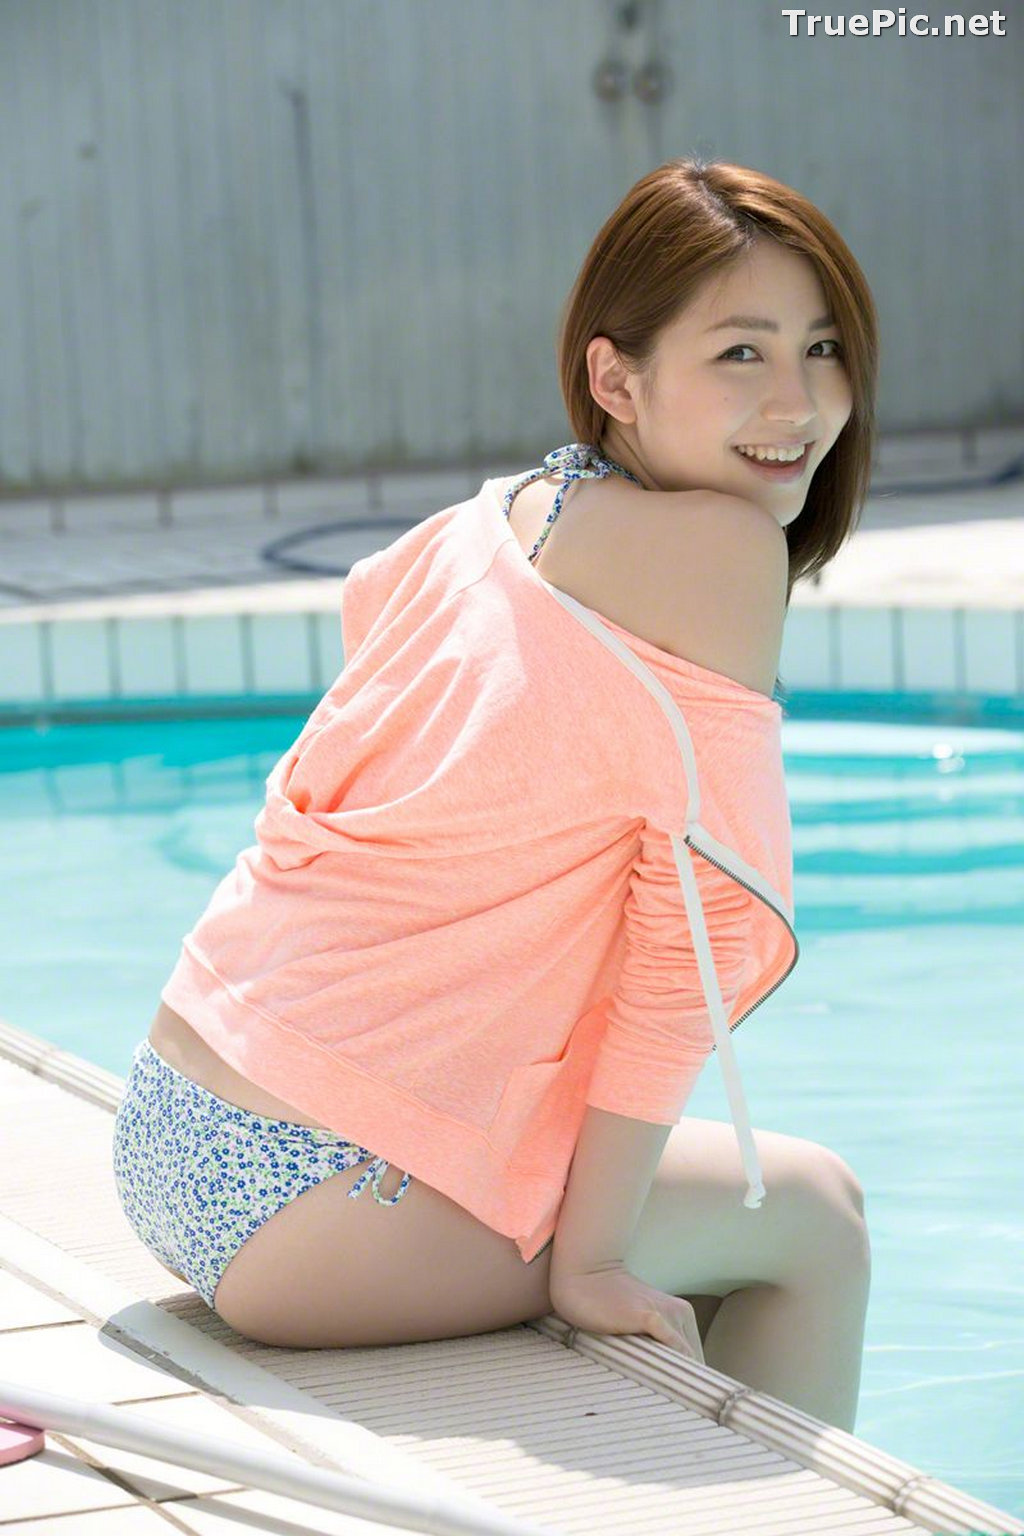 Image [Wanibooks Jacket] No.129 - Japanese Singer and Actress - You Kikkawa - TruePic.net - Picture-109